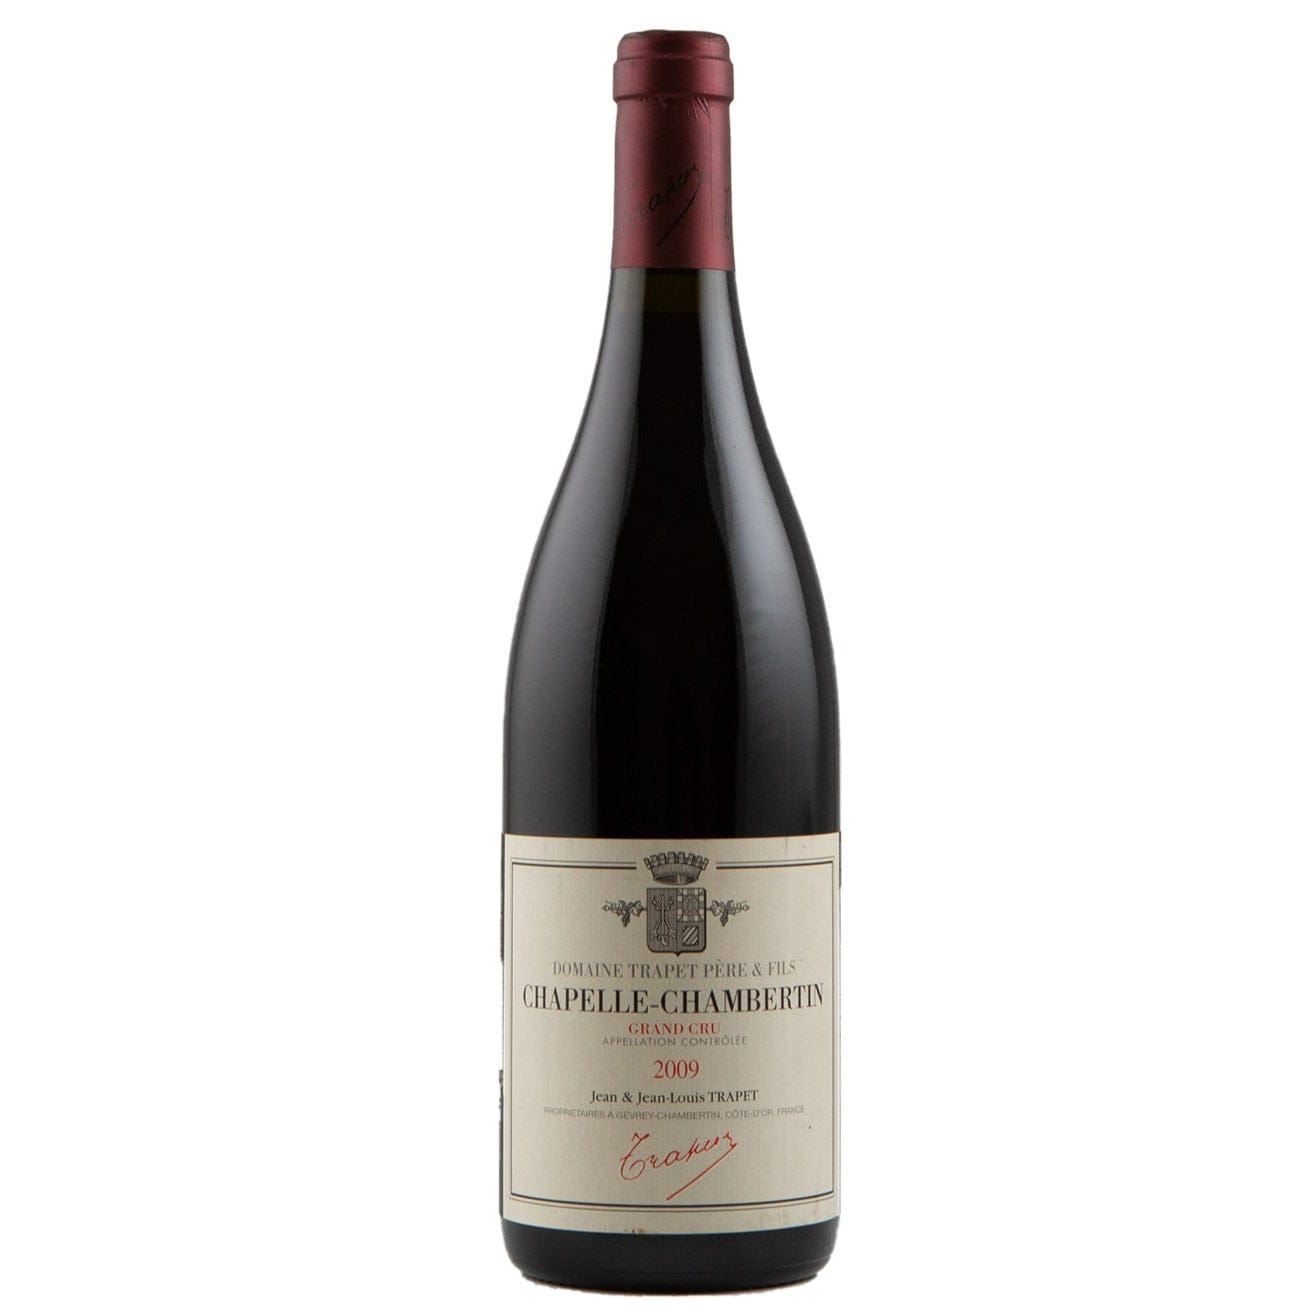 Single bottle of Red wine Dom. Trapet Pere & Fils, Chapelle-Chambertin Grand Cru, Gevrey Chambertin, 2009 100% Pinot Noir